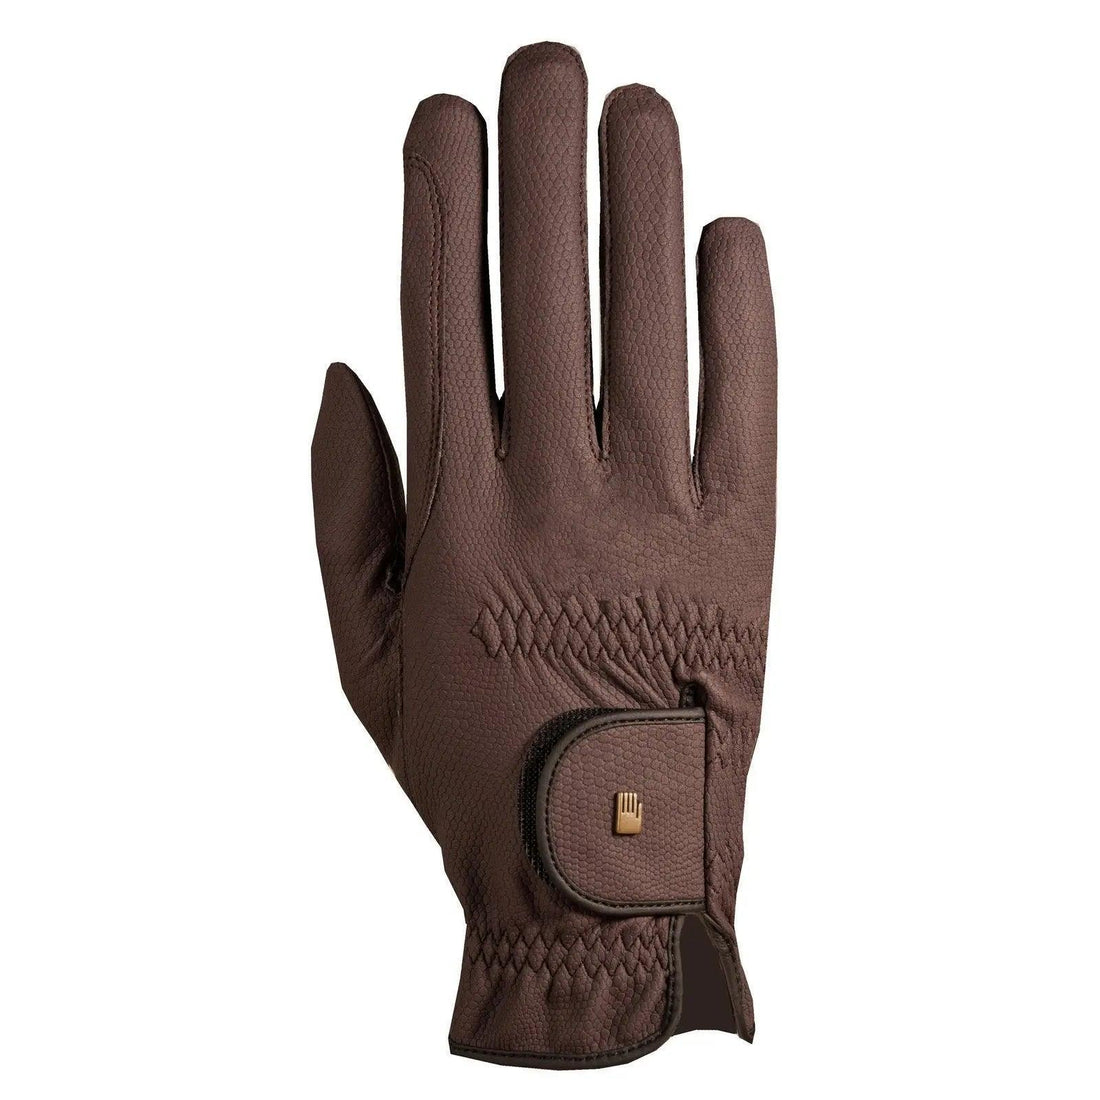 Roeckl roeck grip winter gloves - HorseworldEU